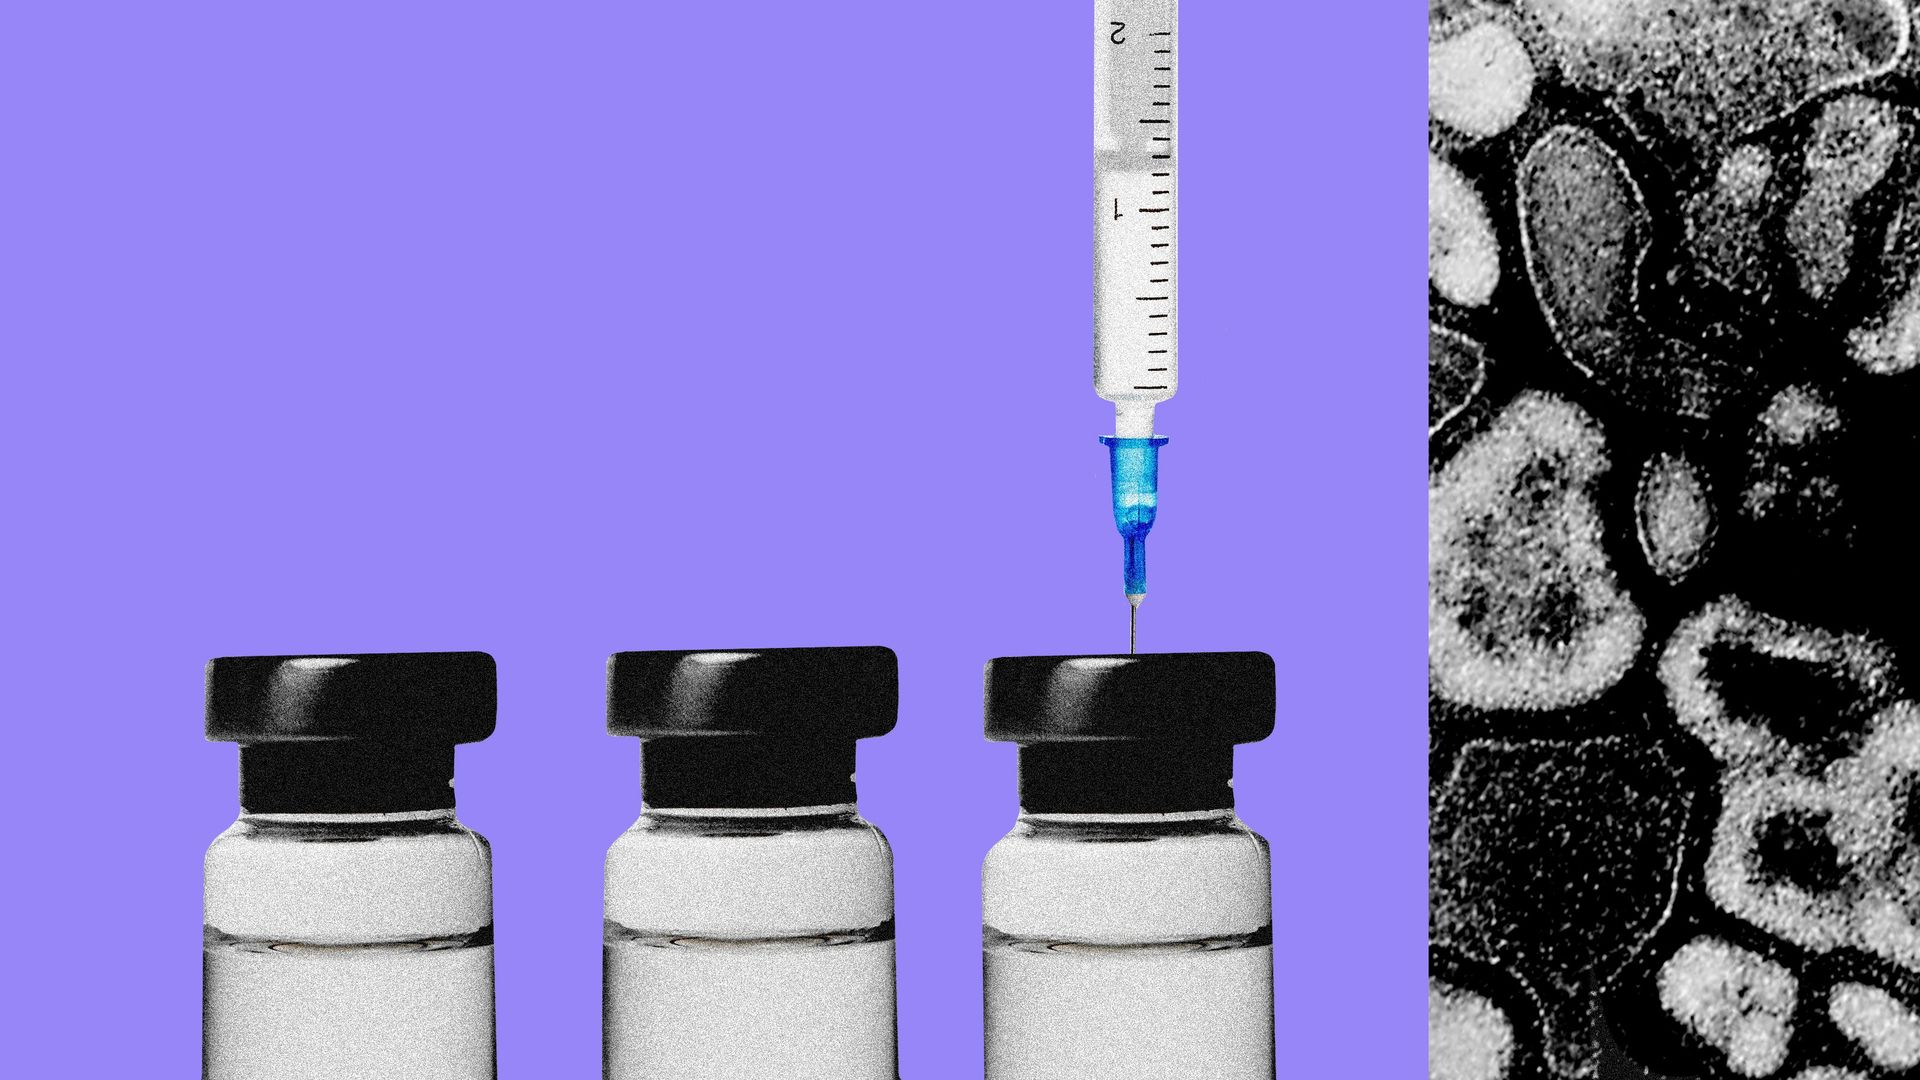 Illustration of needles, vials and flu virus